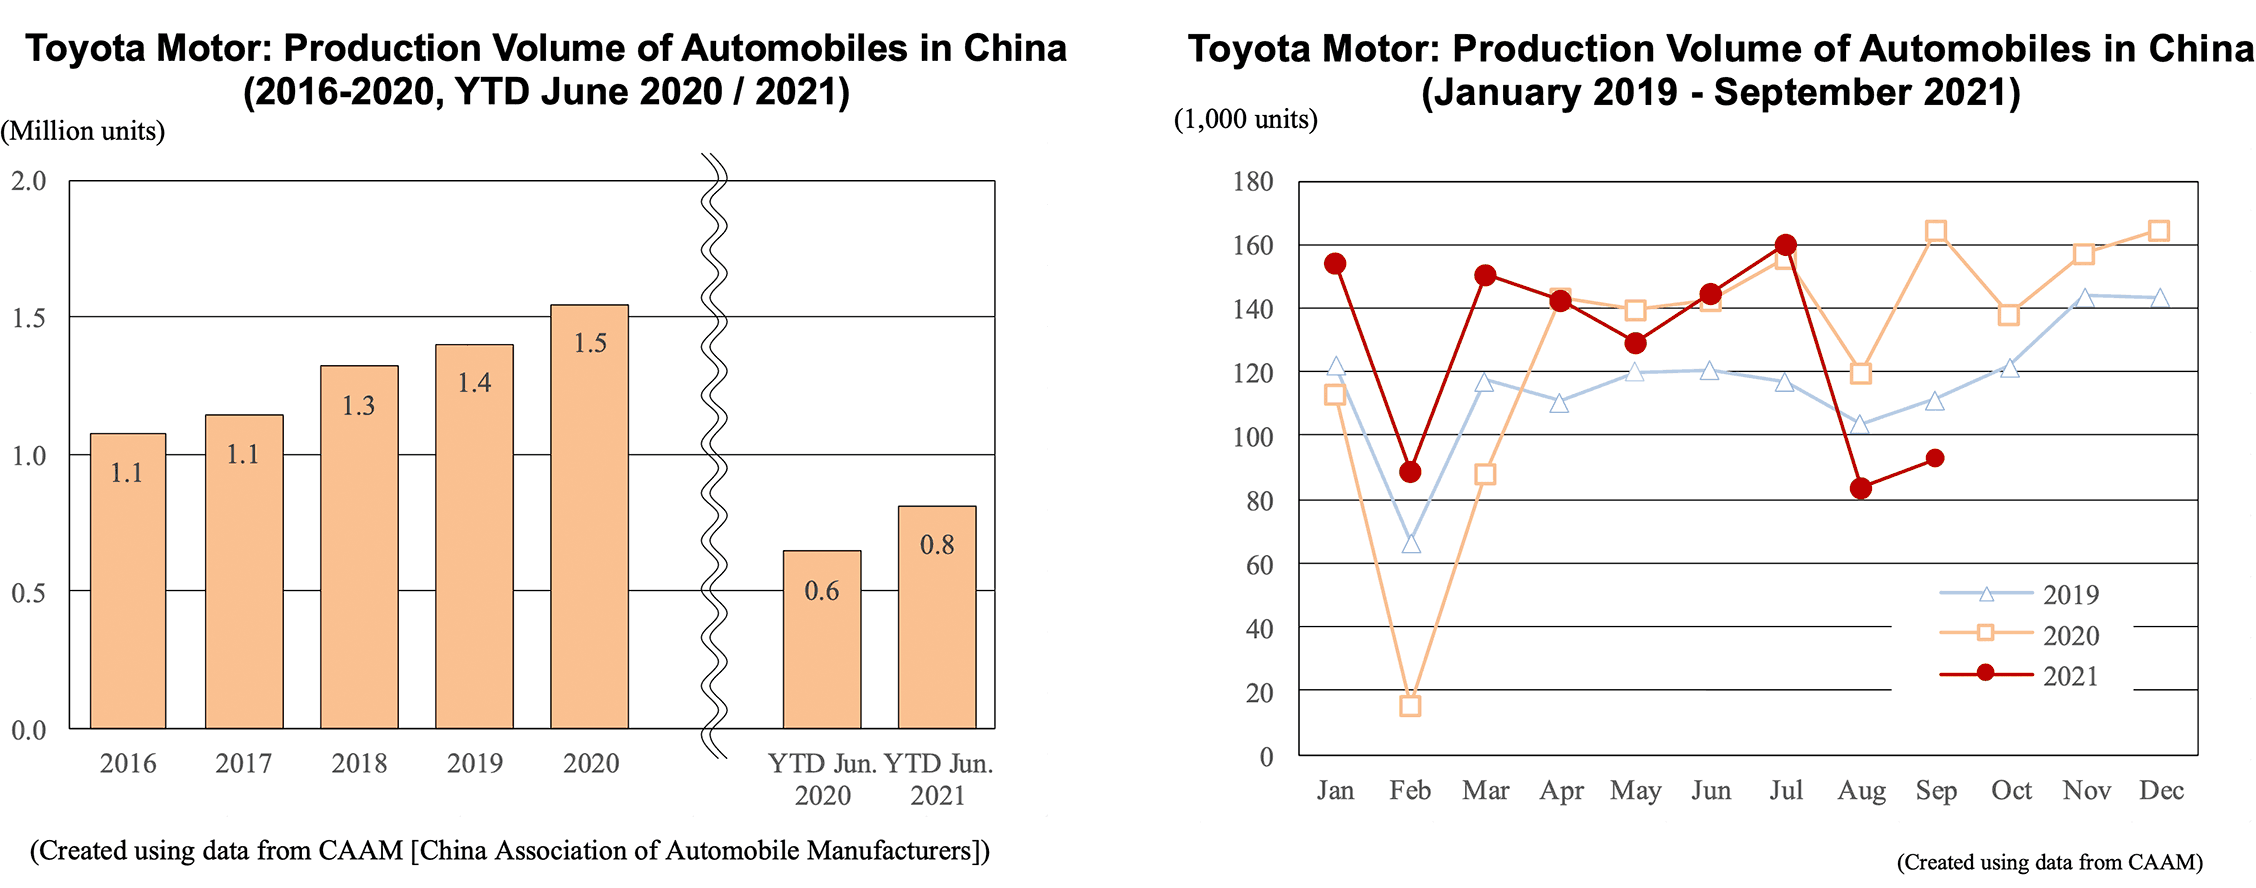 Toyota Motor: Production Volume of Automobiles in China (2016-2020, YTD June 2020 / 2021) | Toyota Motor: Production Volume of Automobiles in China (January 2019 - September 2021)